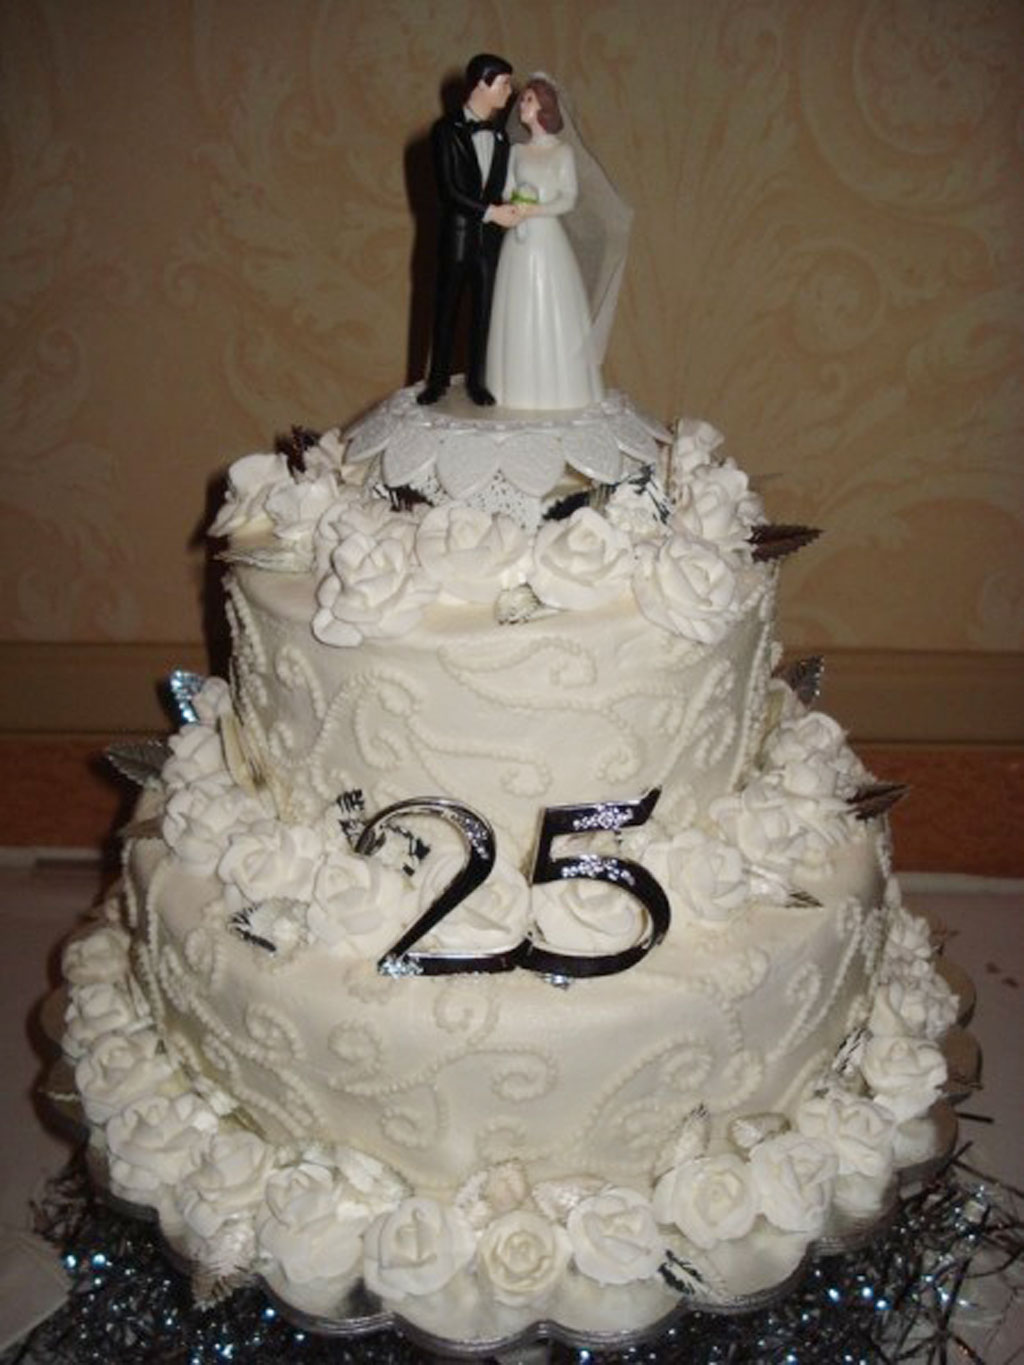 Wedding anniversary cakes ideas